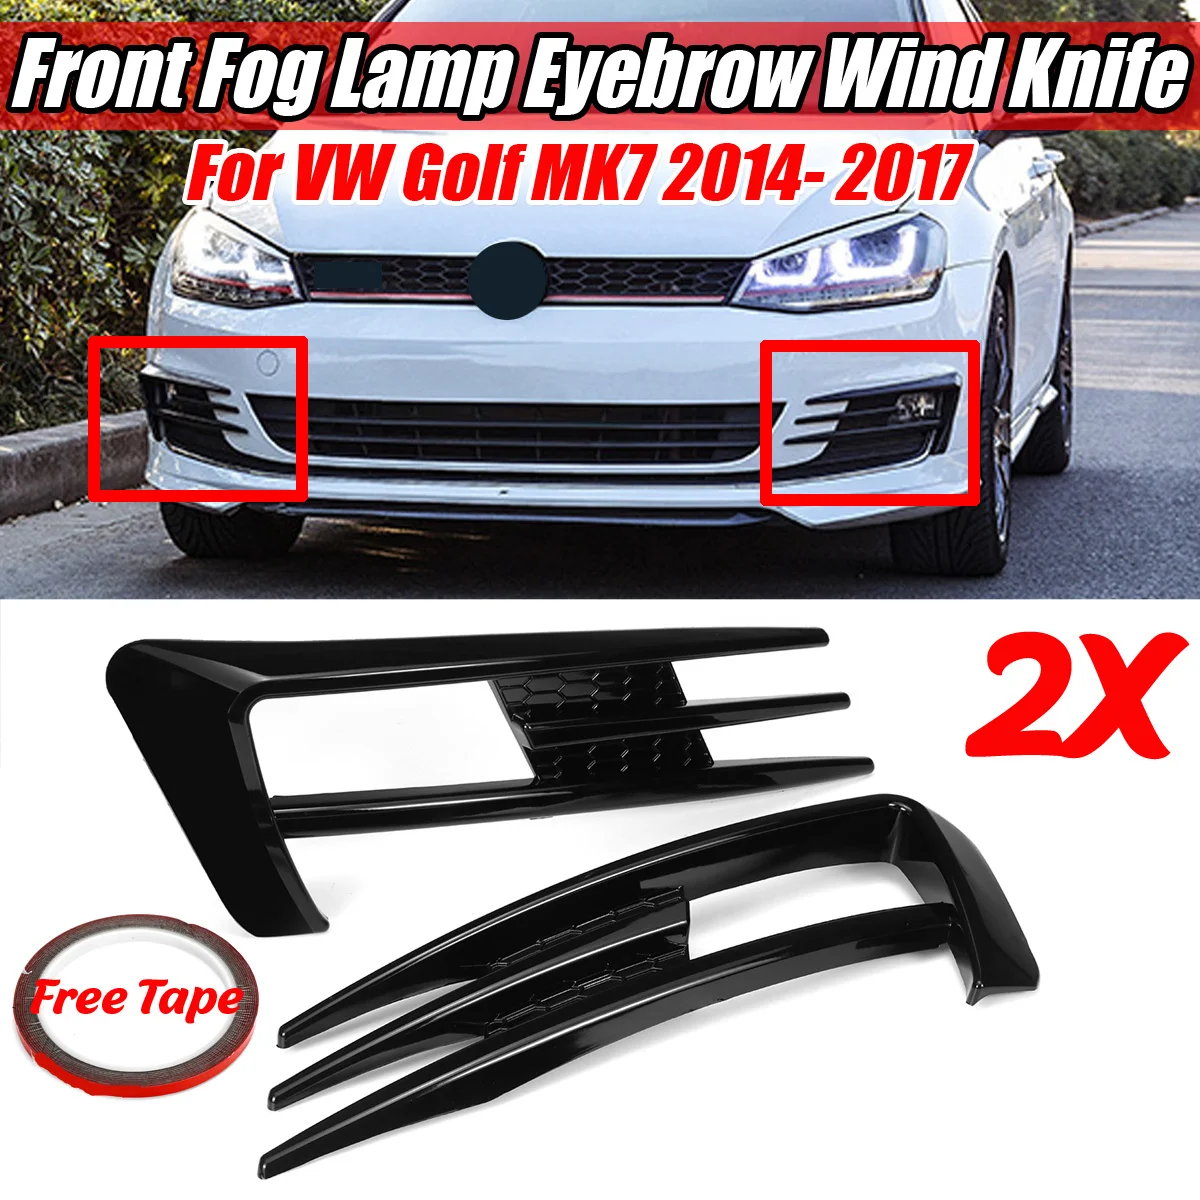 

Glossy Black / Carbon Fiber Look 2PCS Car Front Fog Light Lamp Eyebrow Eye Lid Wind Knife Cover For VW For Golf MK7 2014-2017